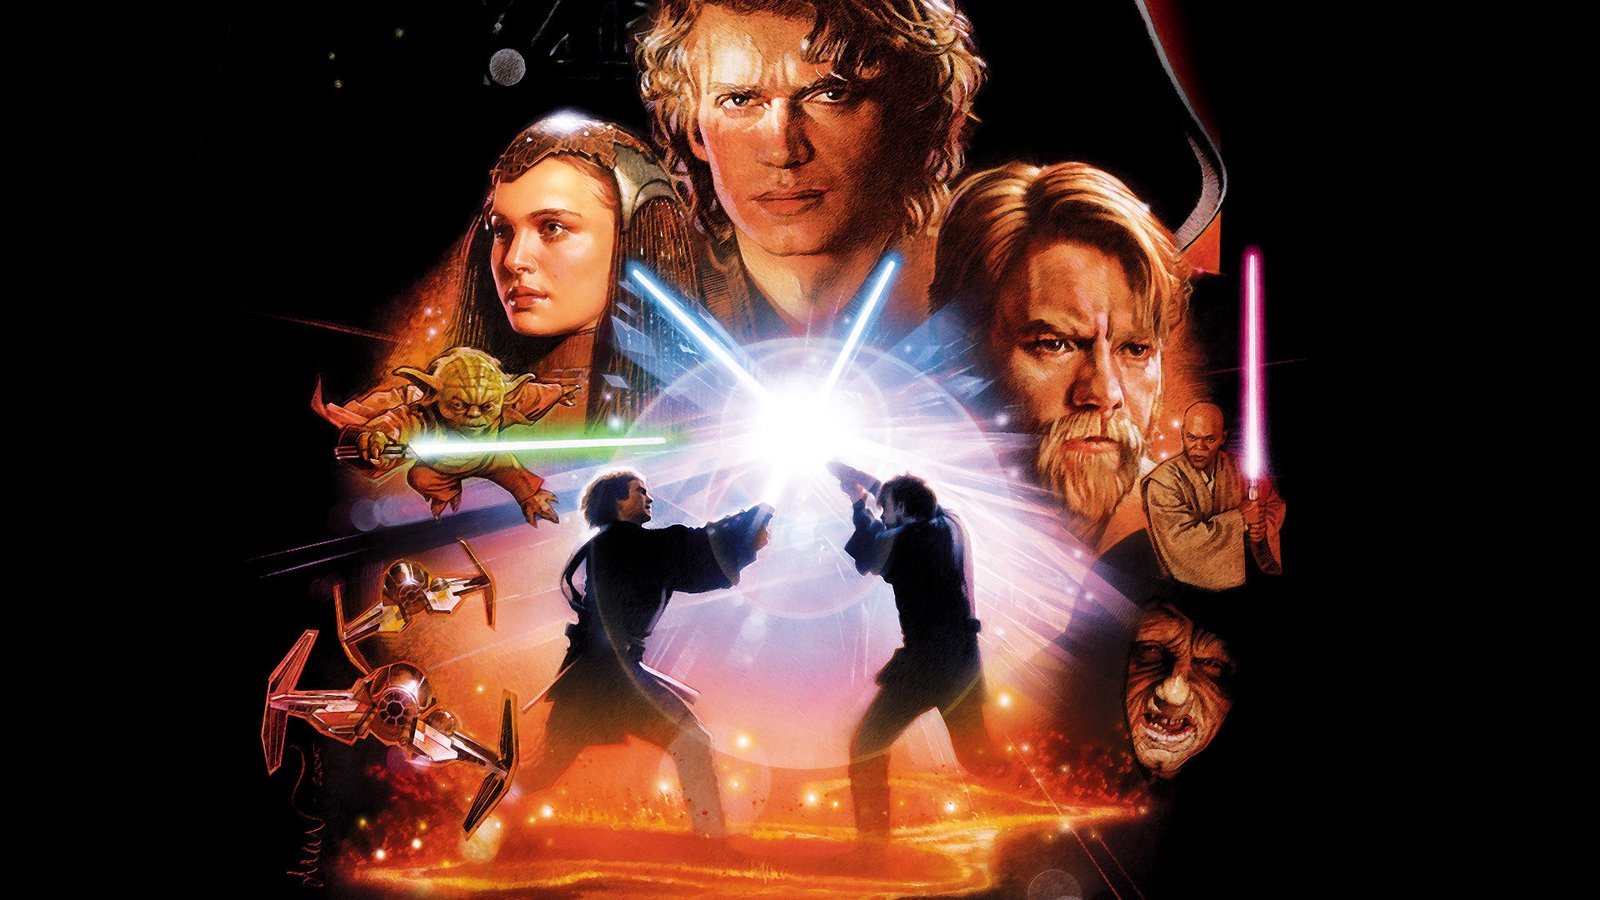  / Star Wars: Episode III - Revenge of the Sith